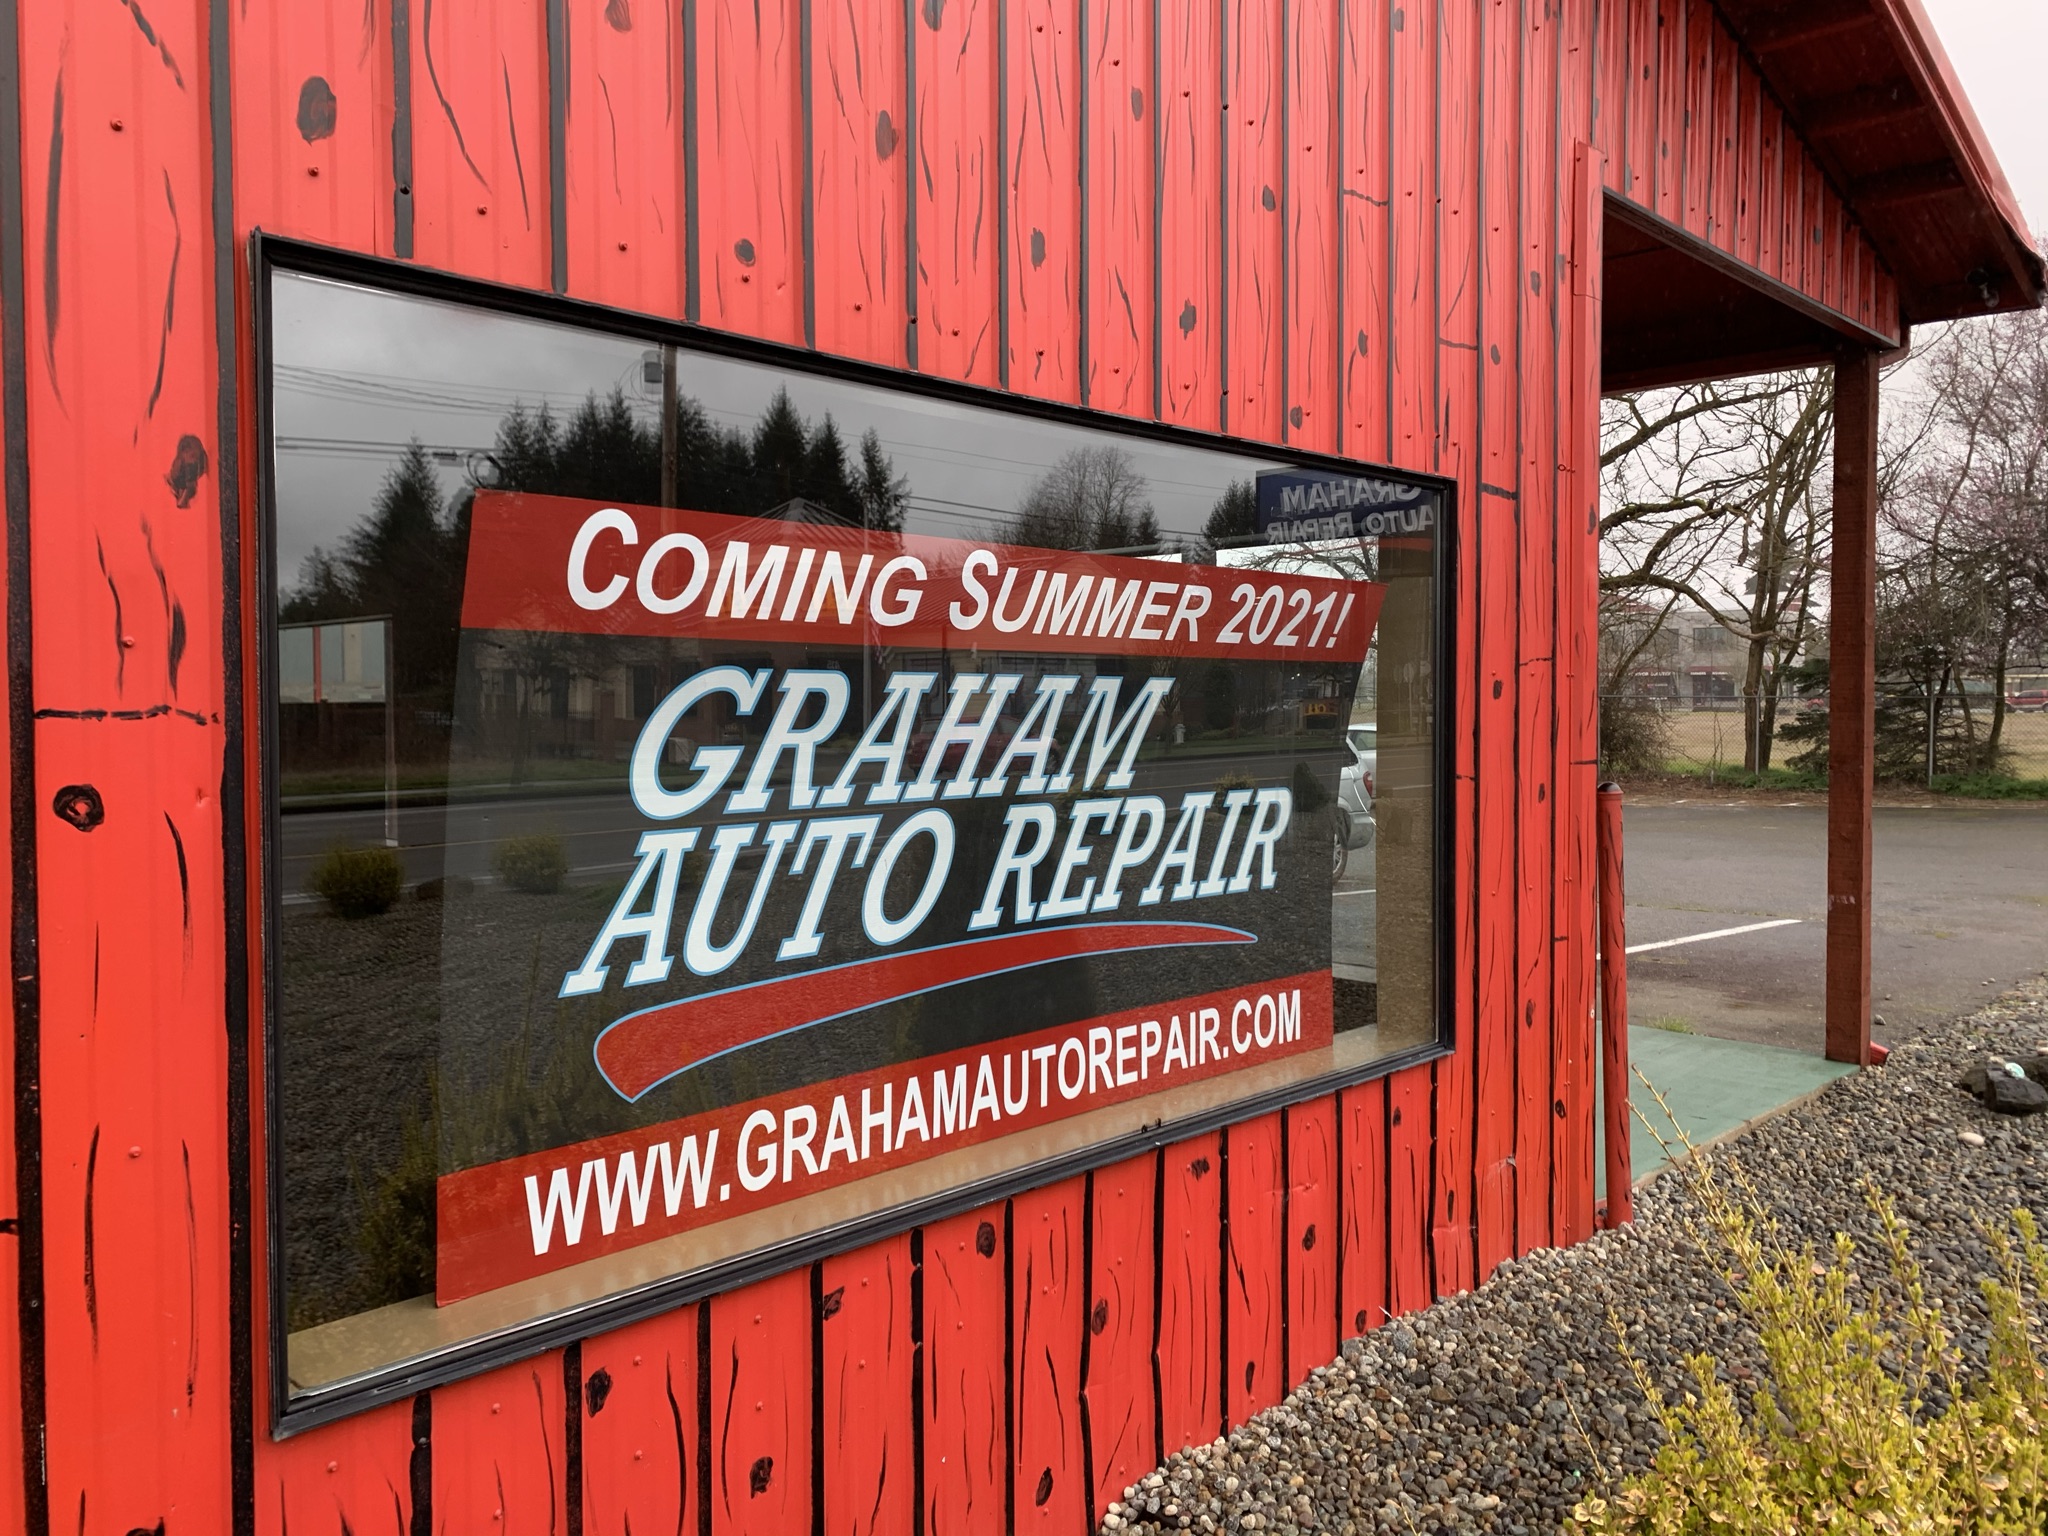 Graham Auto Repair Near Me, Coming to Yelm, WA 98597 in 2021